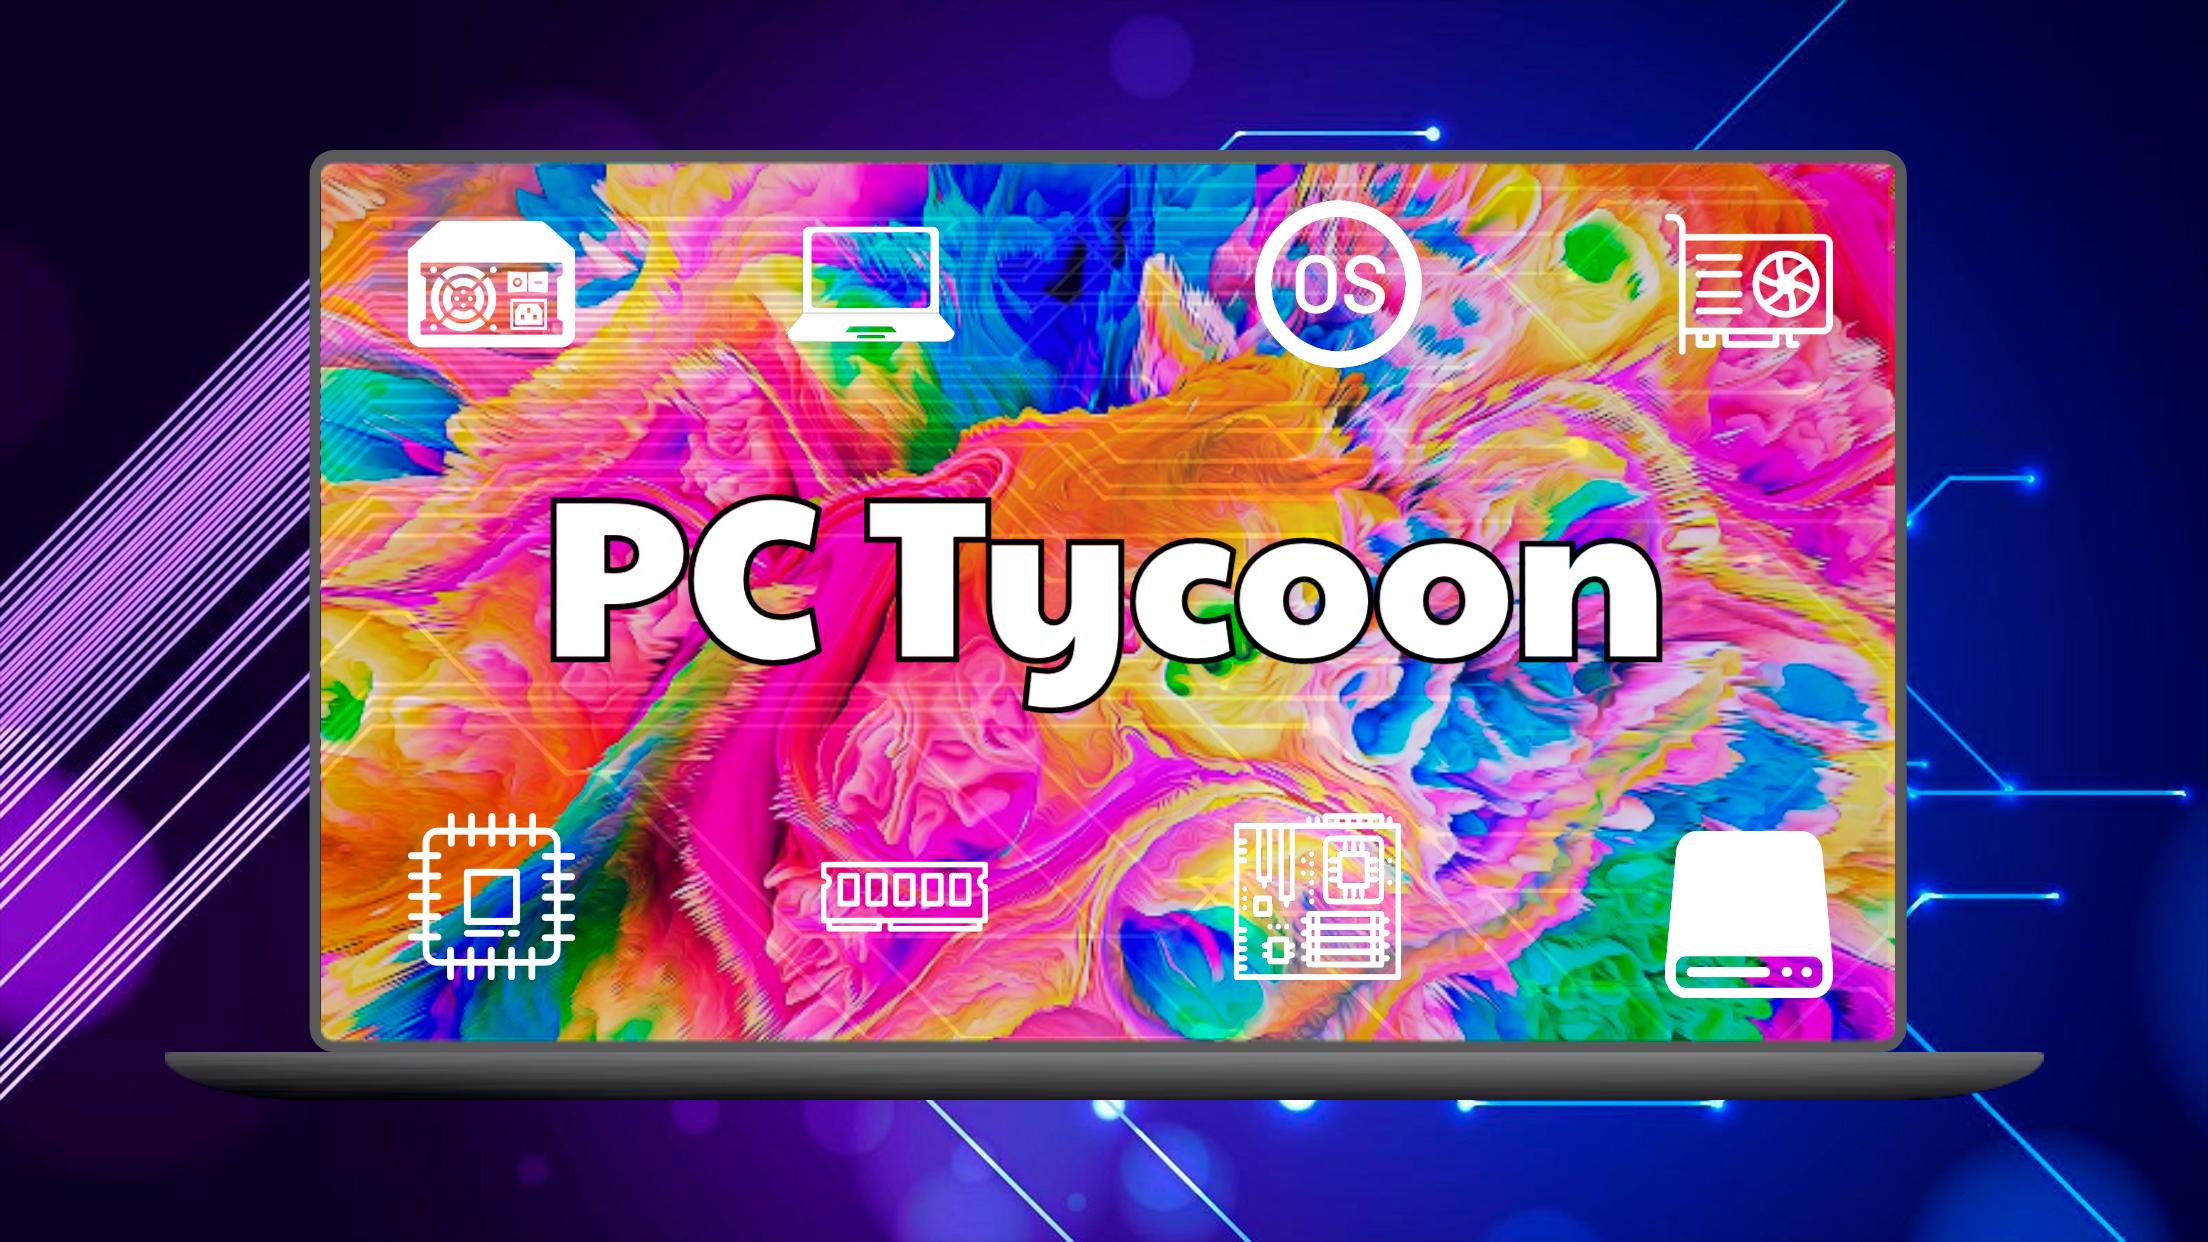 Pc tycoon 2 1.2. PC Tycoon 2. Laptop Tycoon. Игра на ноутбук ТАЙКУН. Laptop Tycoon на ПК.